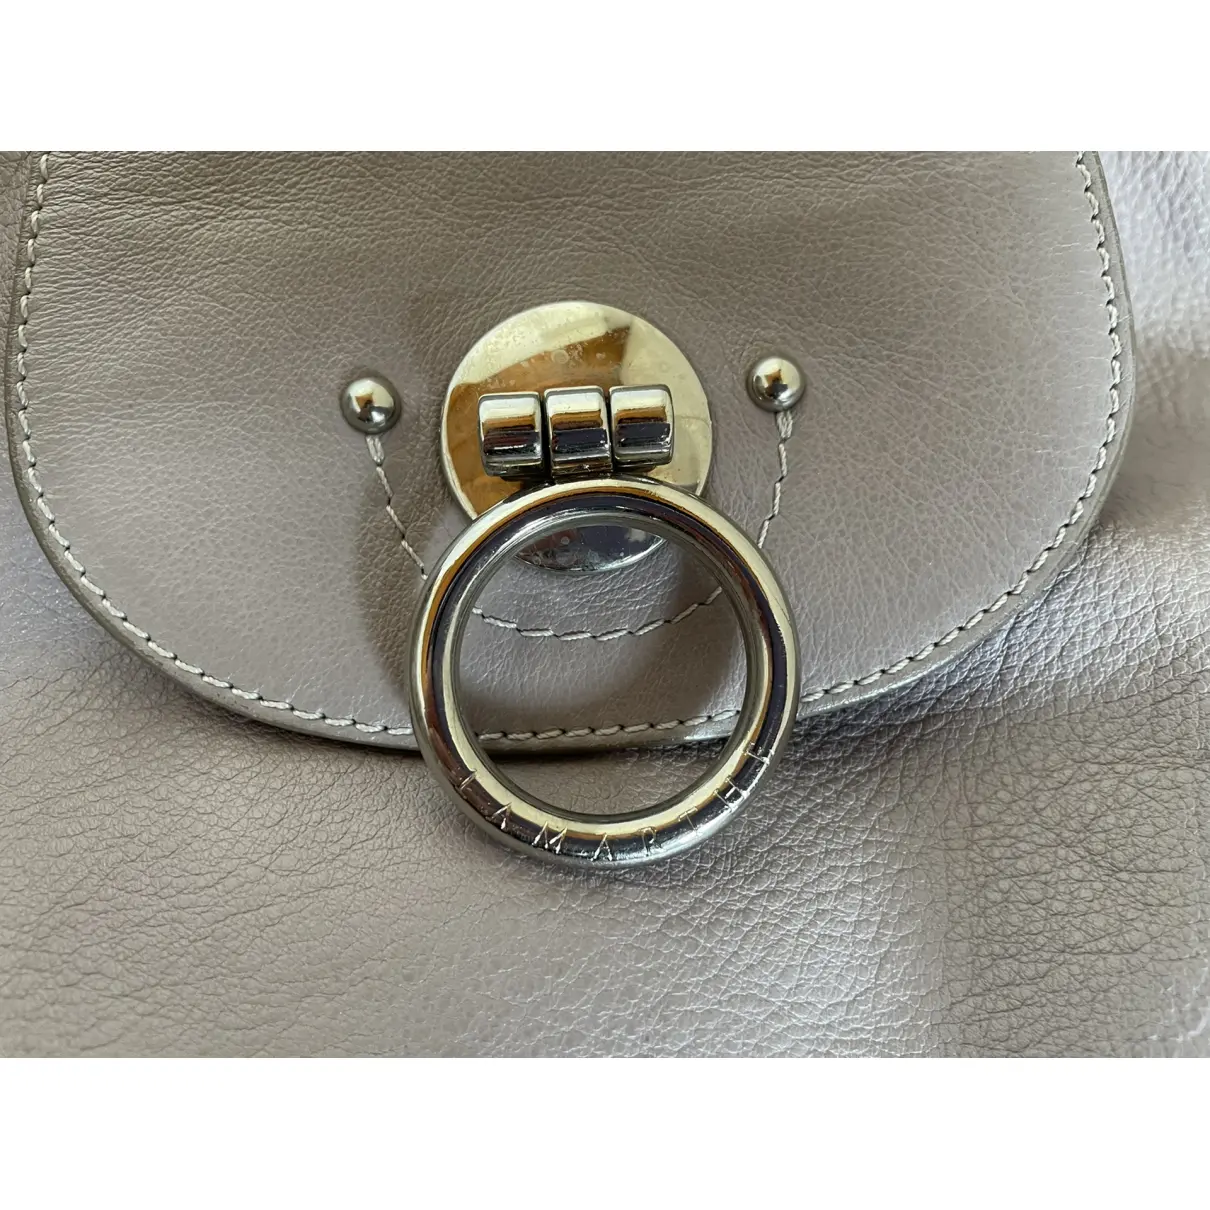 Patent leather handbag LAMARTHE